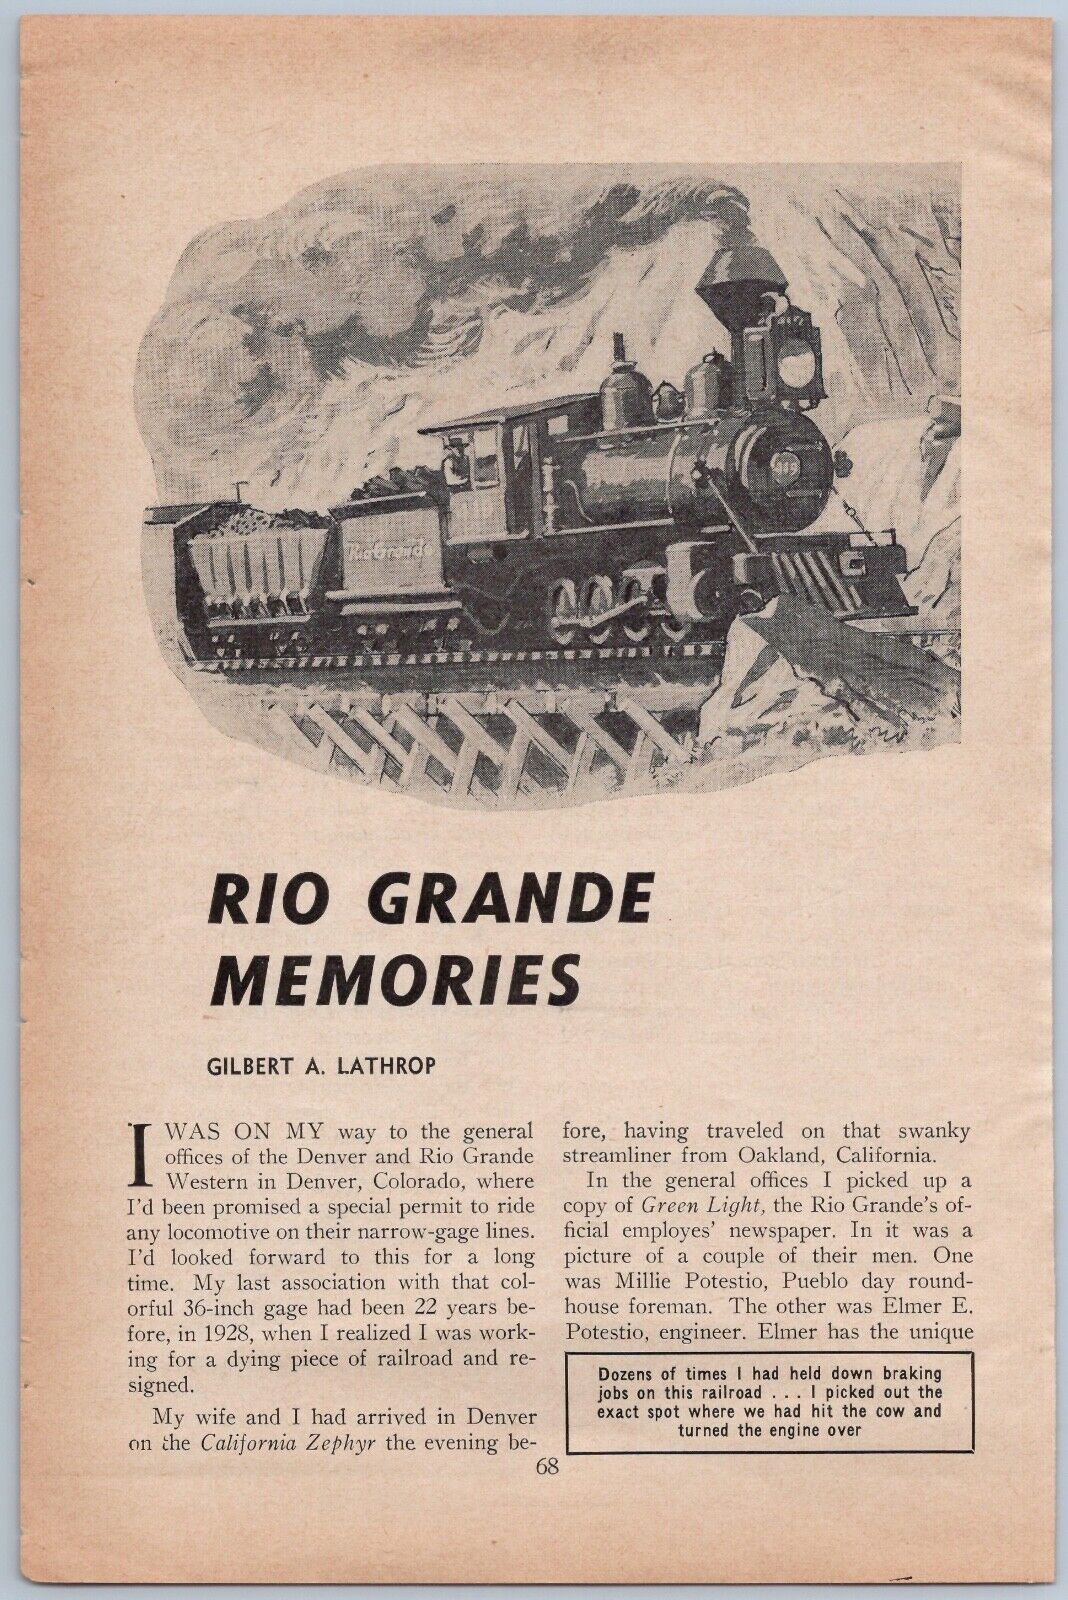 1951 Denver & Rio Grande Western Railroad Article Memories Stories Train History